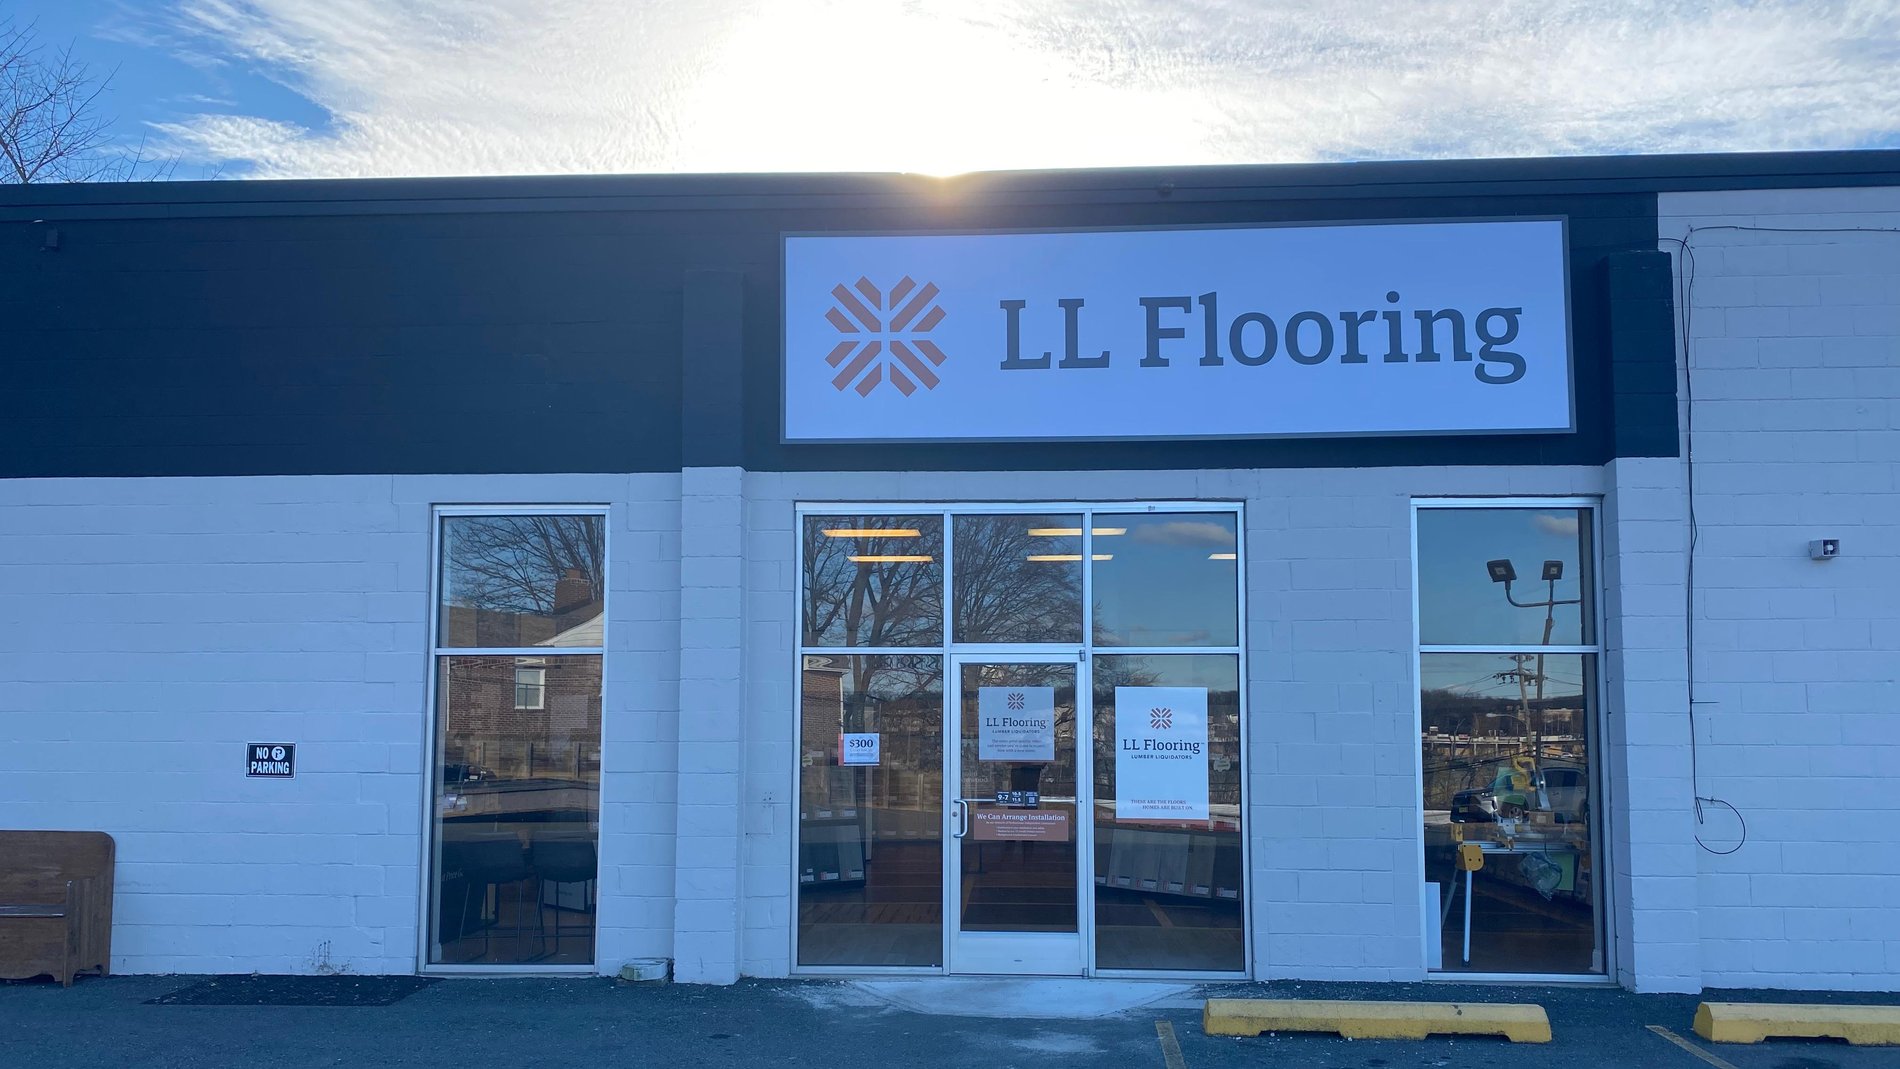 LL Flooring #1004 Claymont | 203 Naamans Road | Storefront